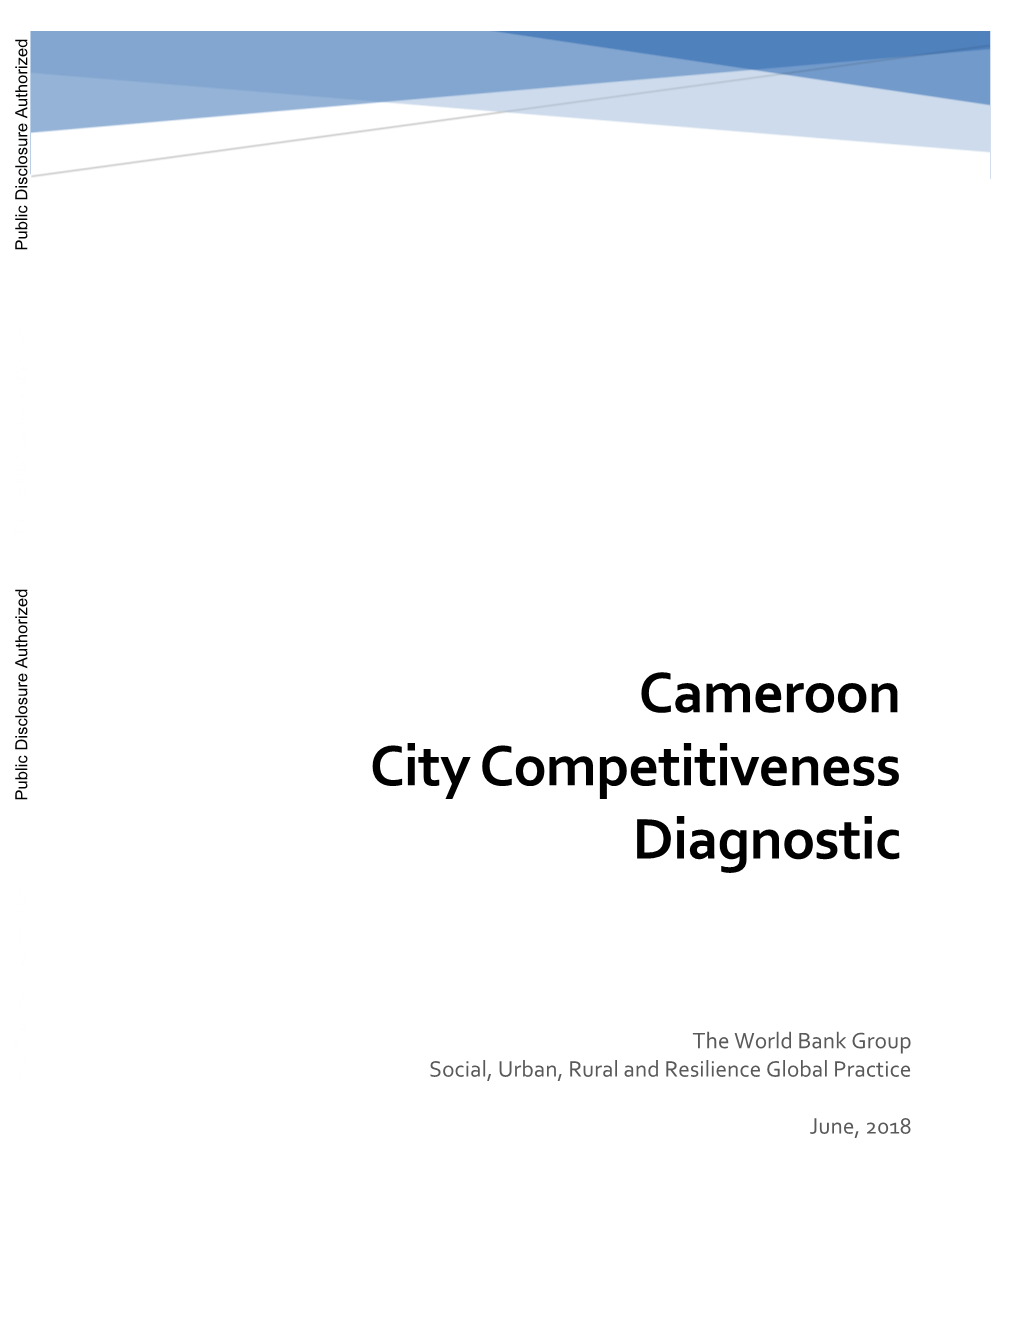 Cameroon City Competitiveness Diagnostic